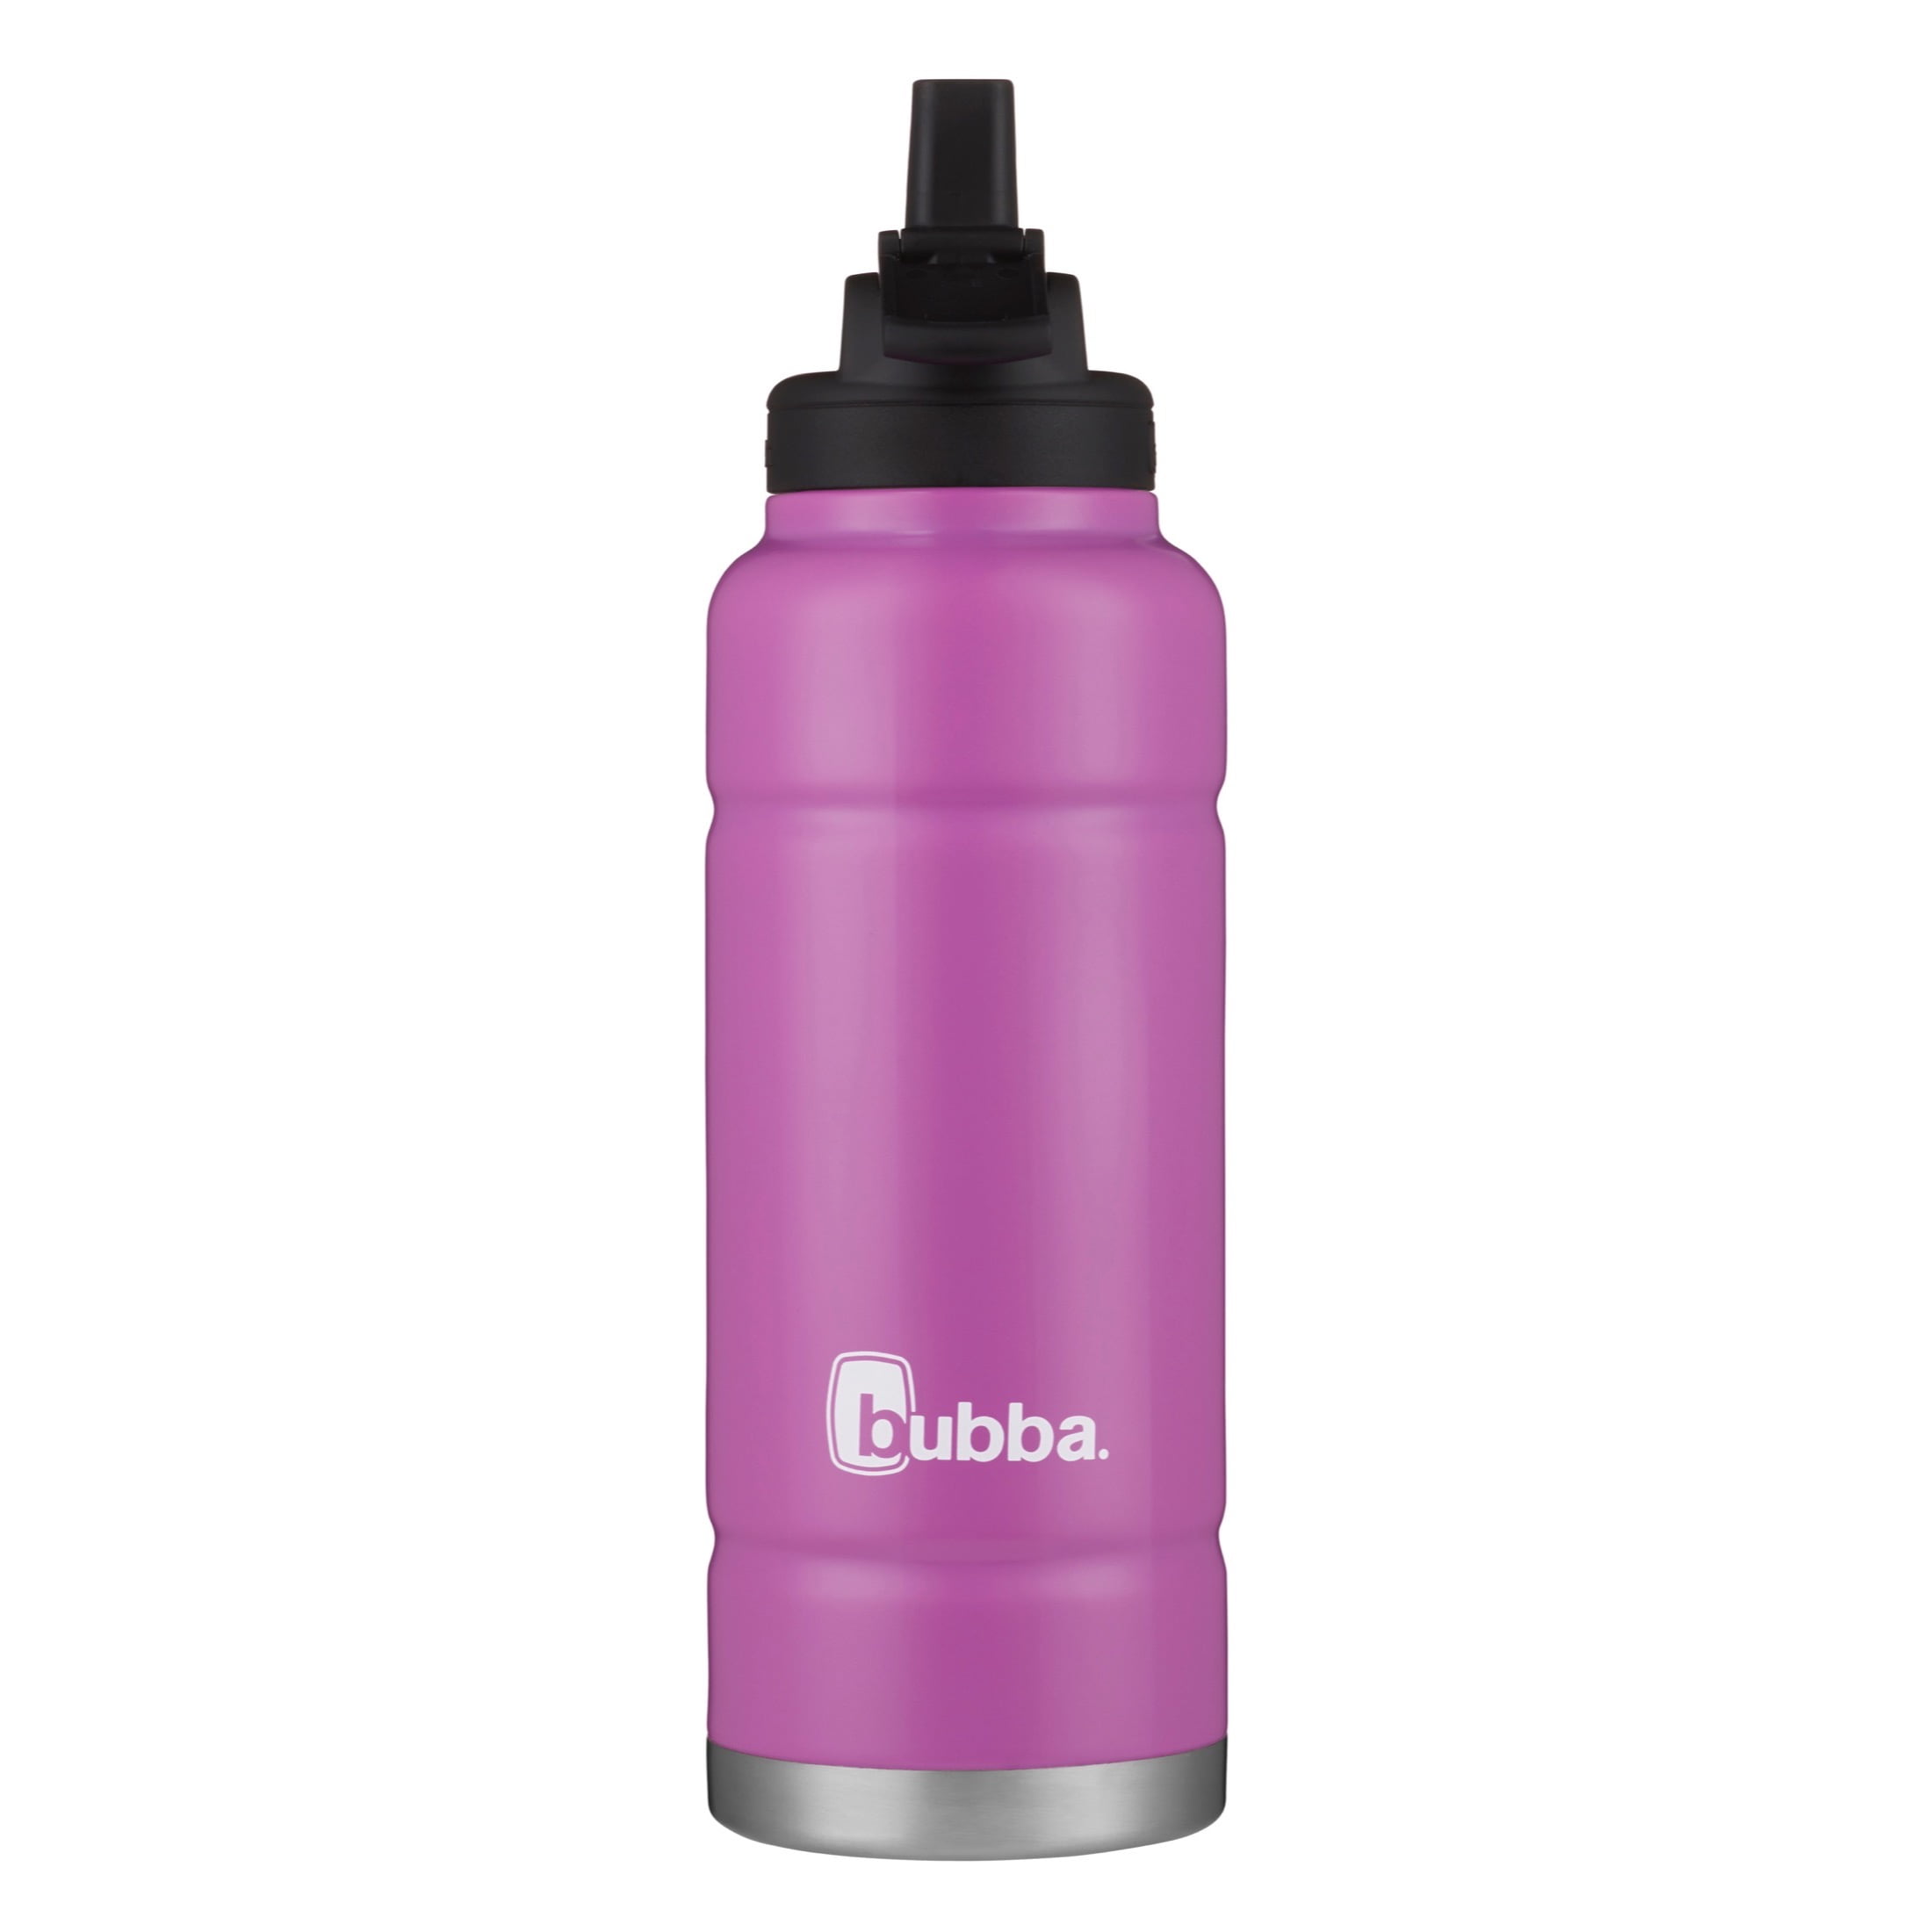 bubba Trailblazer Water Bottle with Straw Mixed Berry